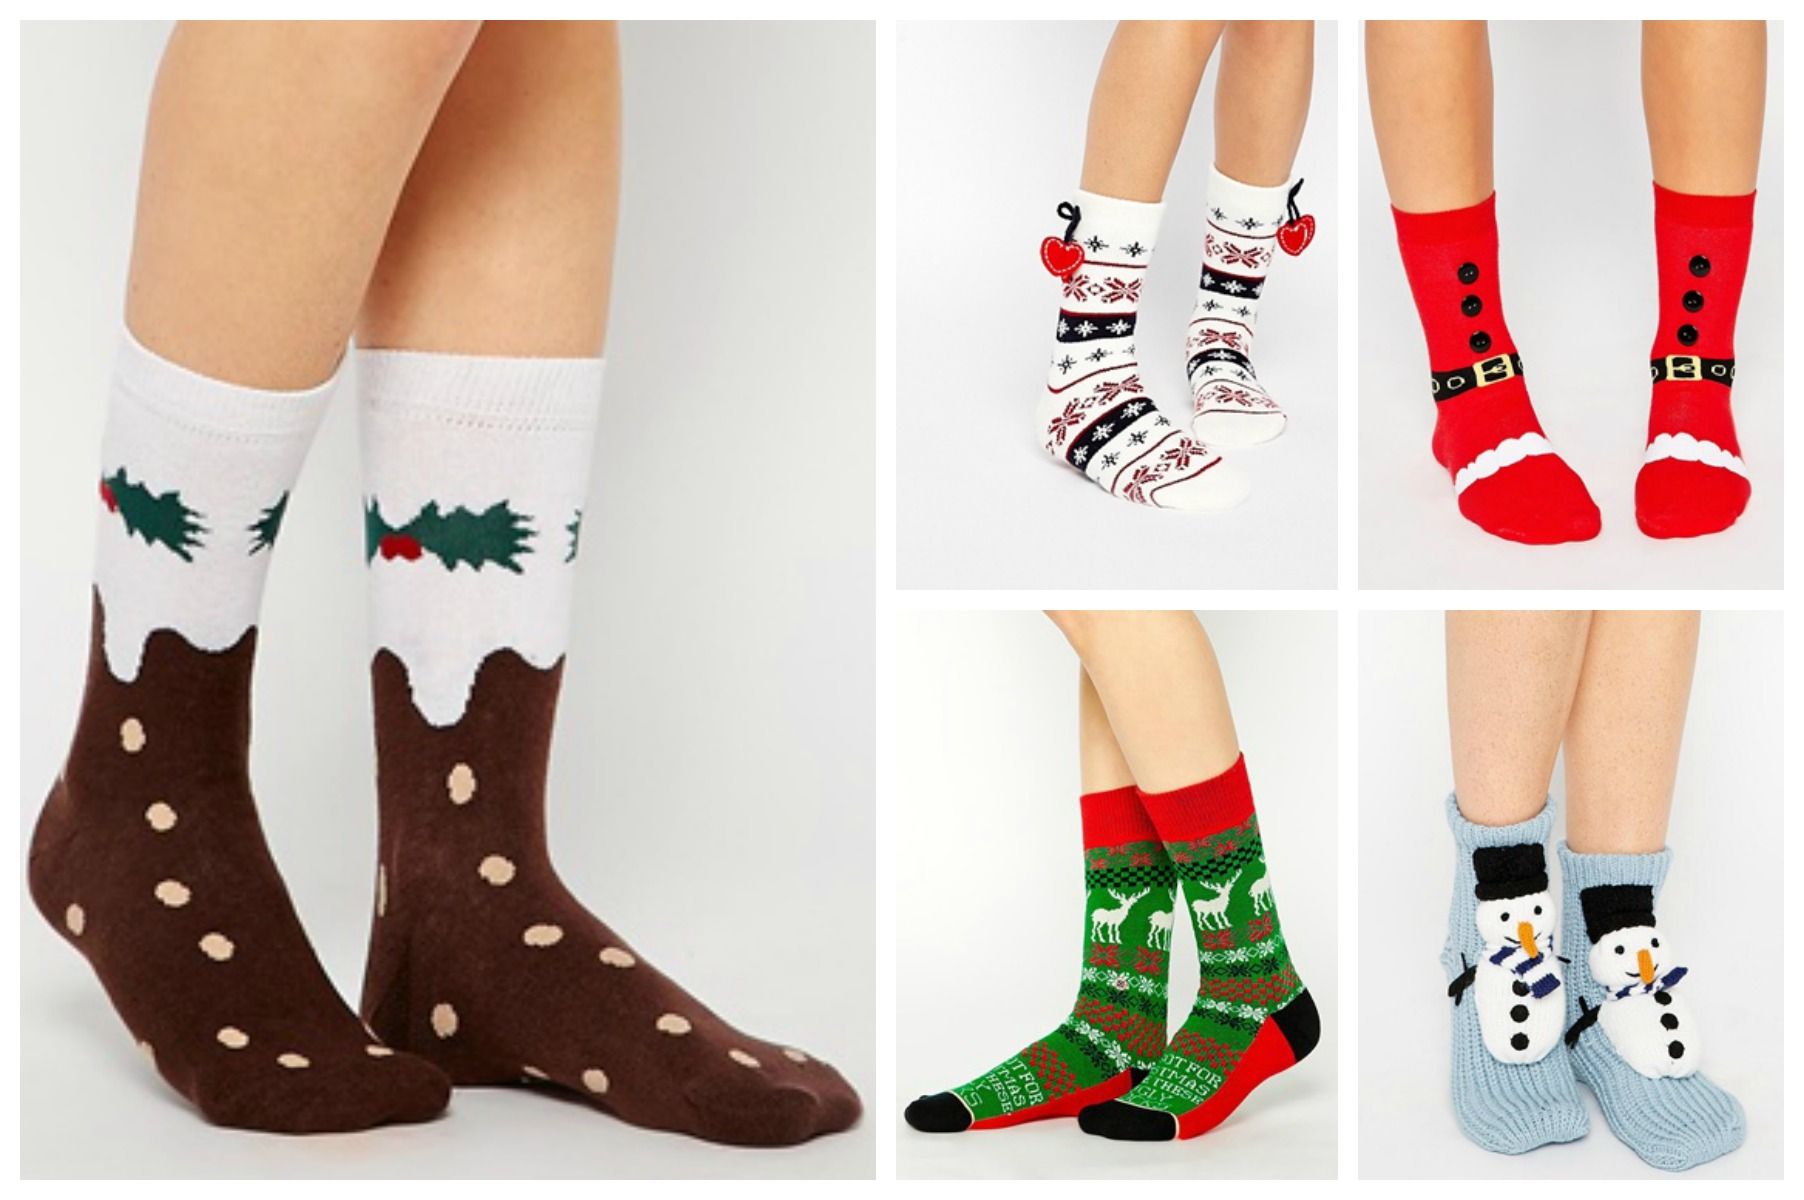 Accessori natalizi: calze e calzini